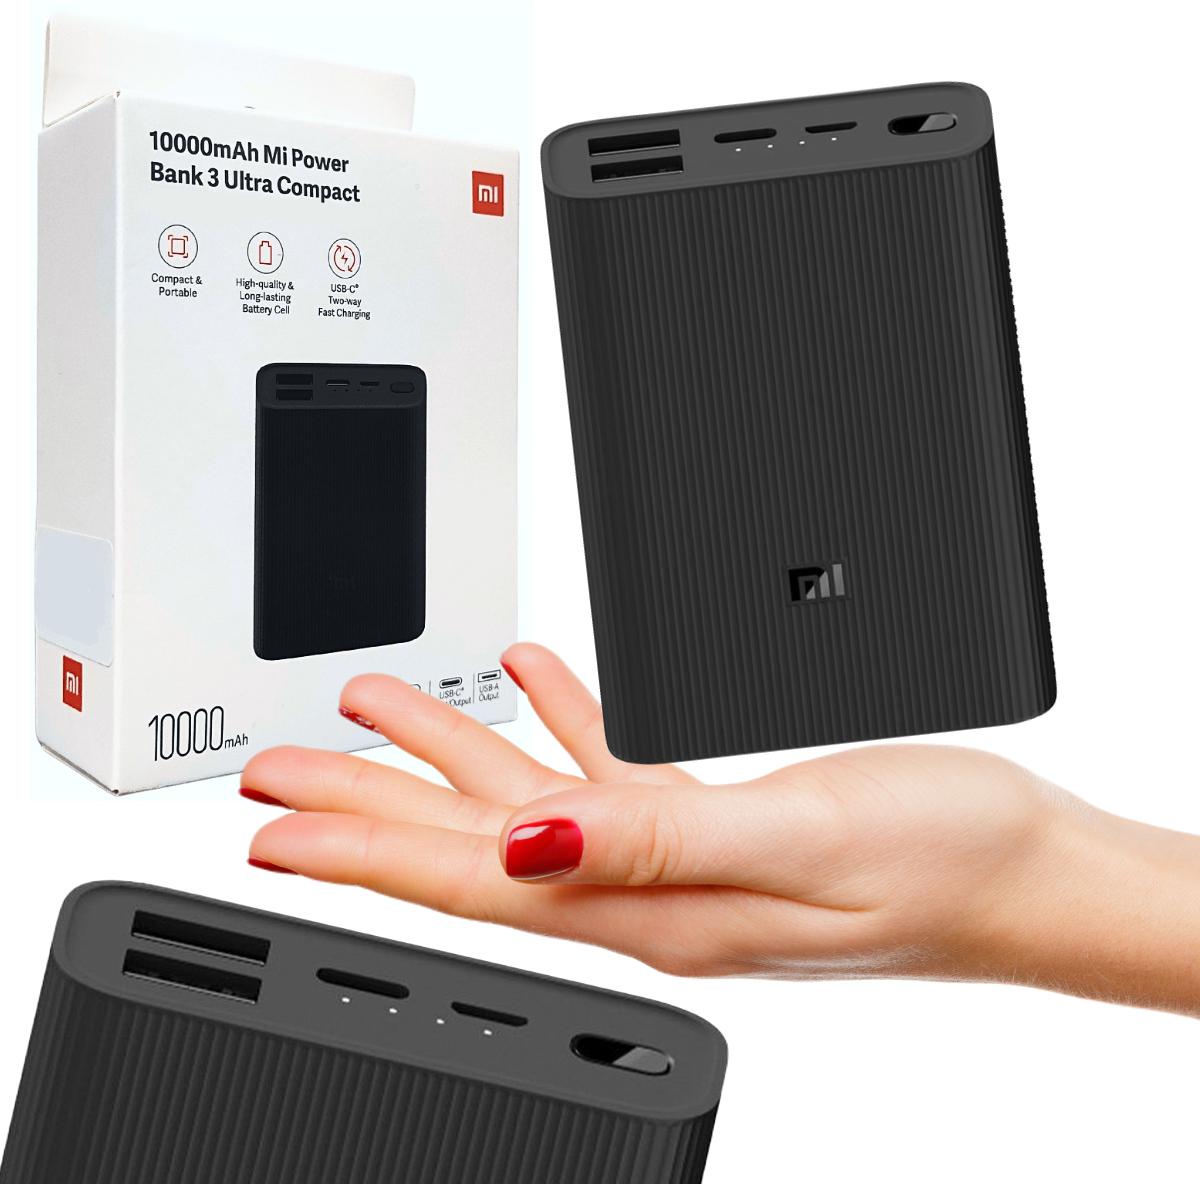 Powerbank 10000mAh Xiaomi Mi Power Bank 3 Ultra Compact - najważniejsze cechy: